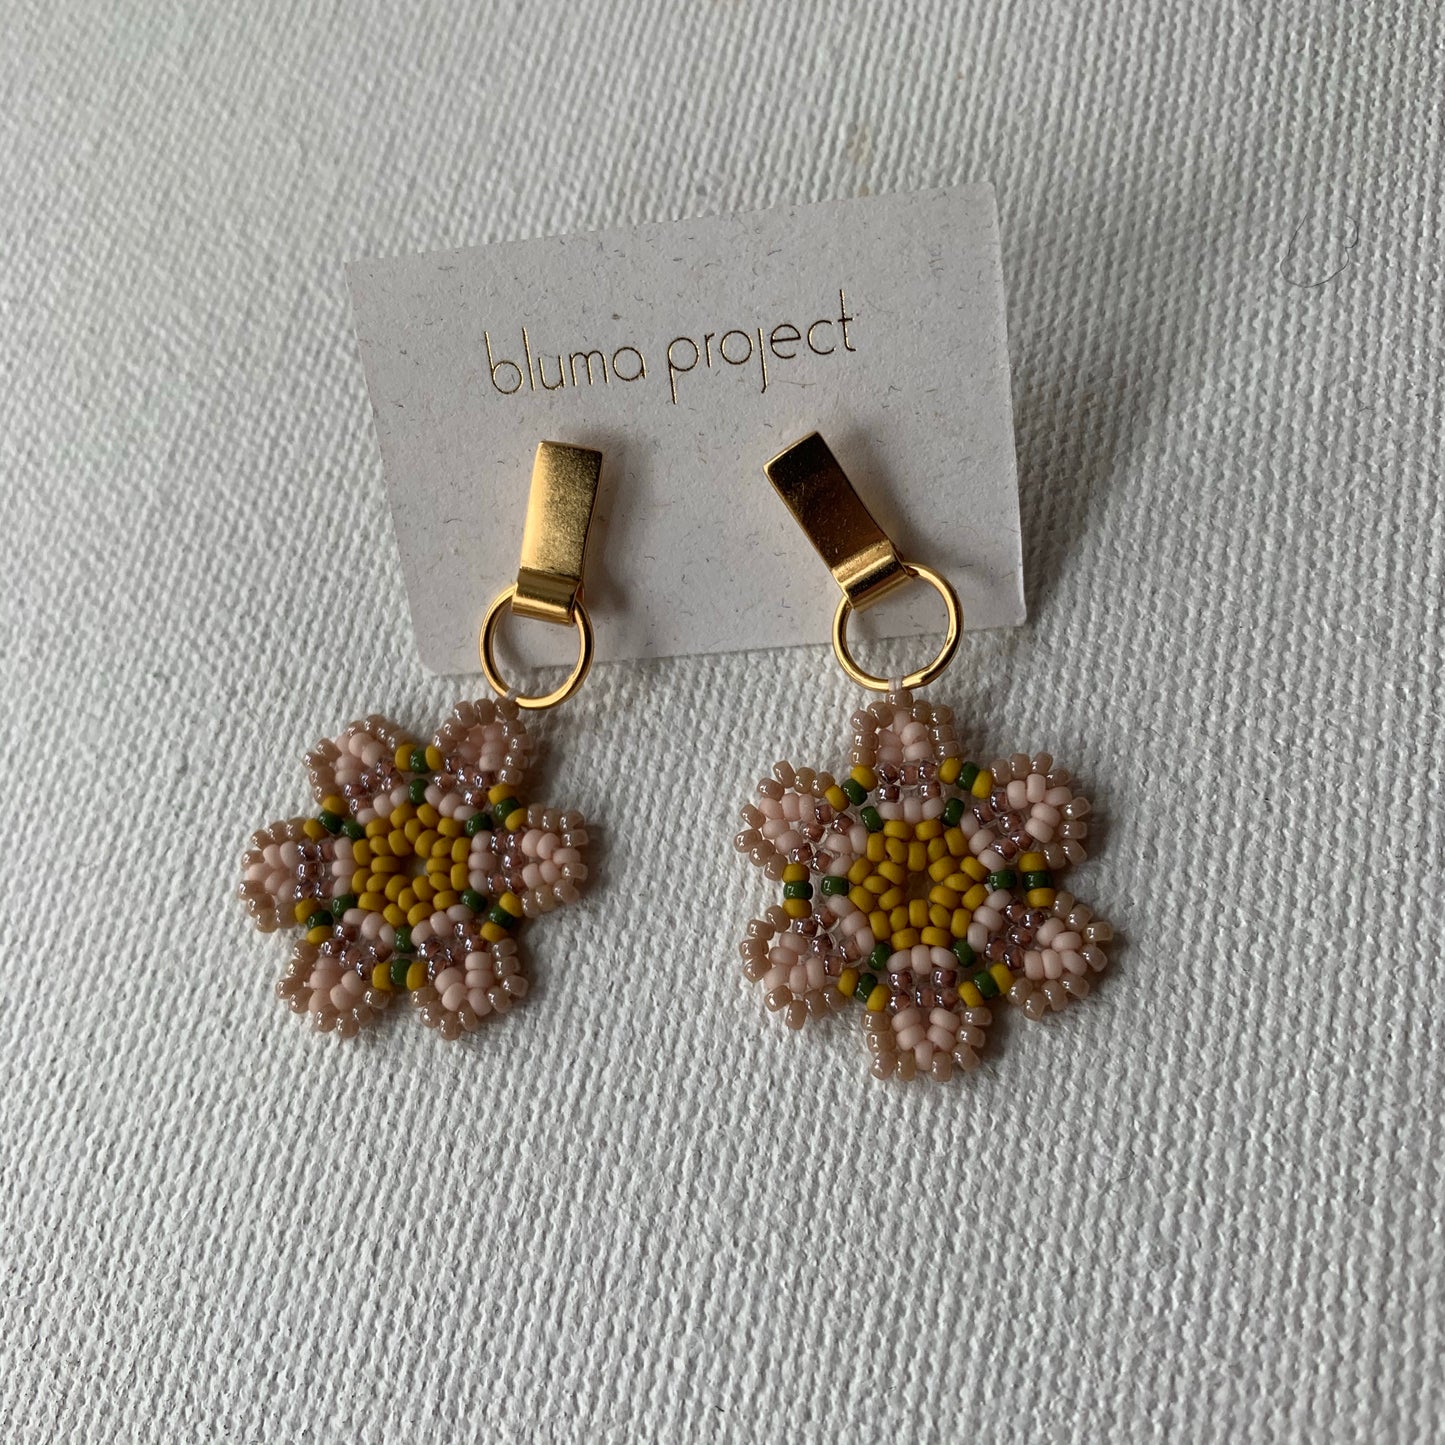 Bluma Project Earring sets